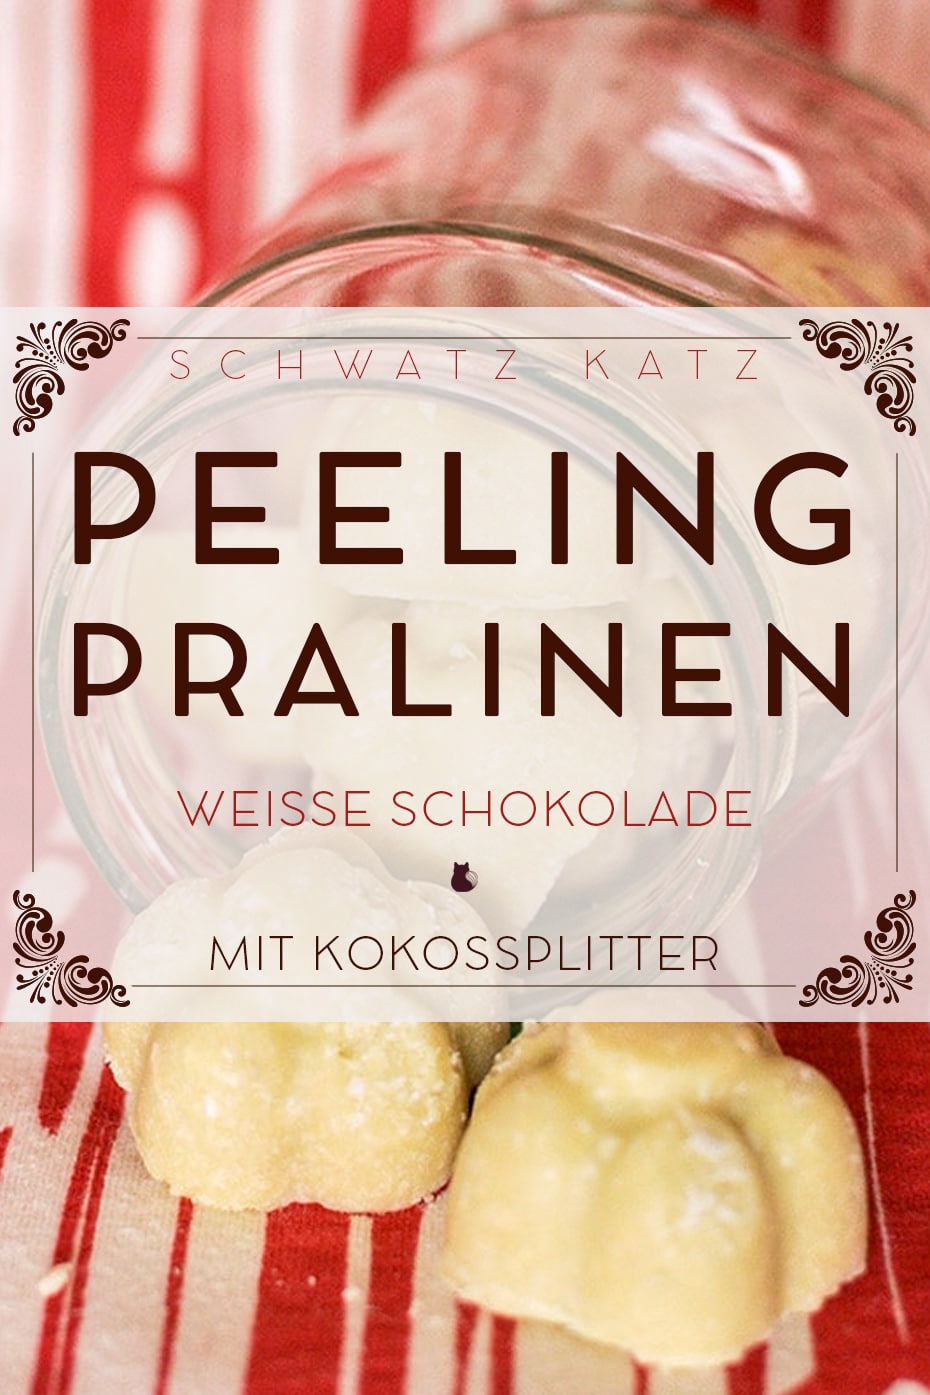 Weiße Schokolade Peeling | Schwatz Katz